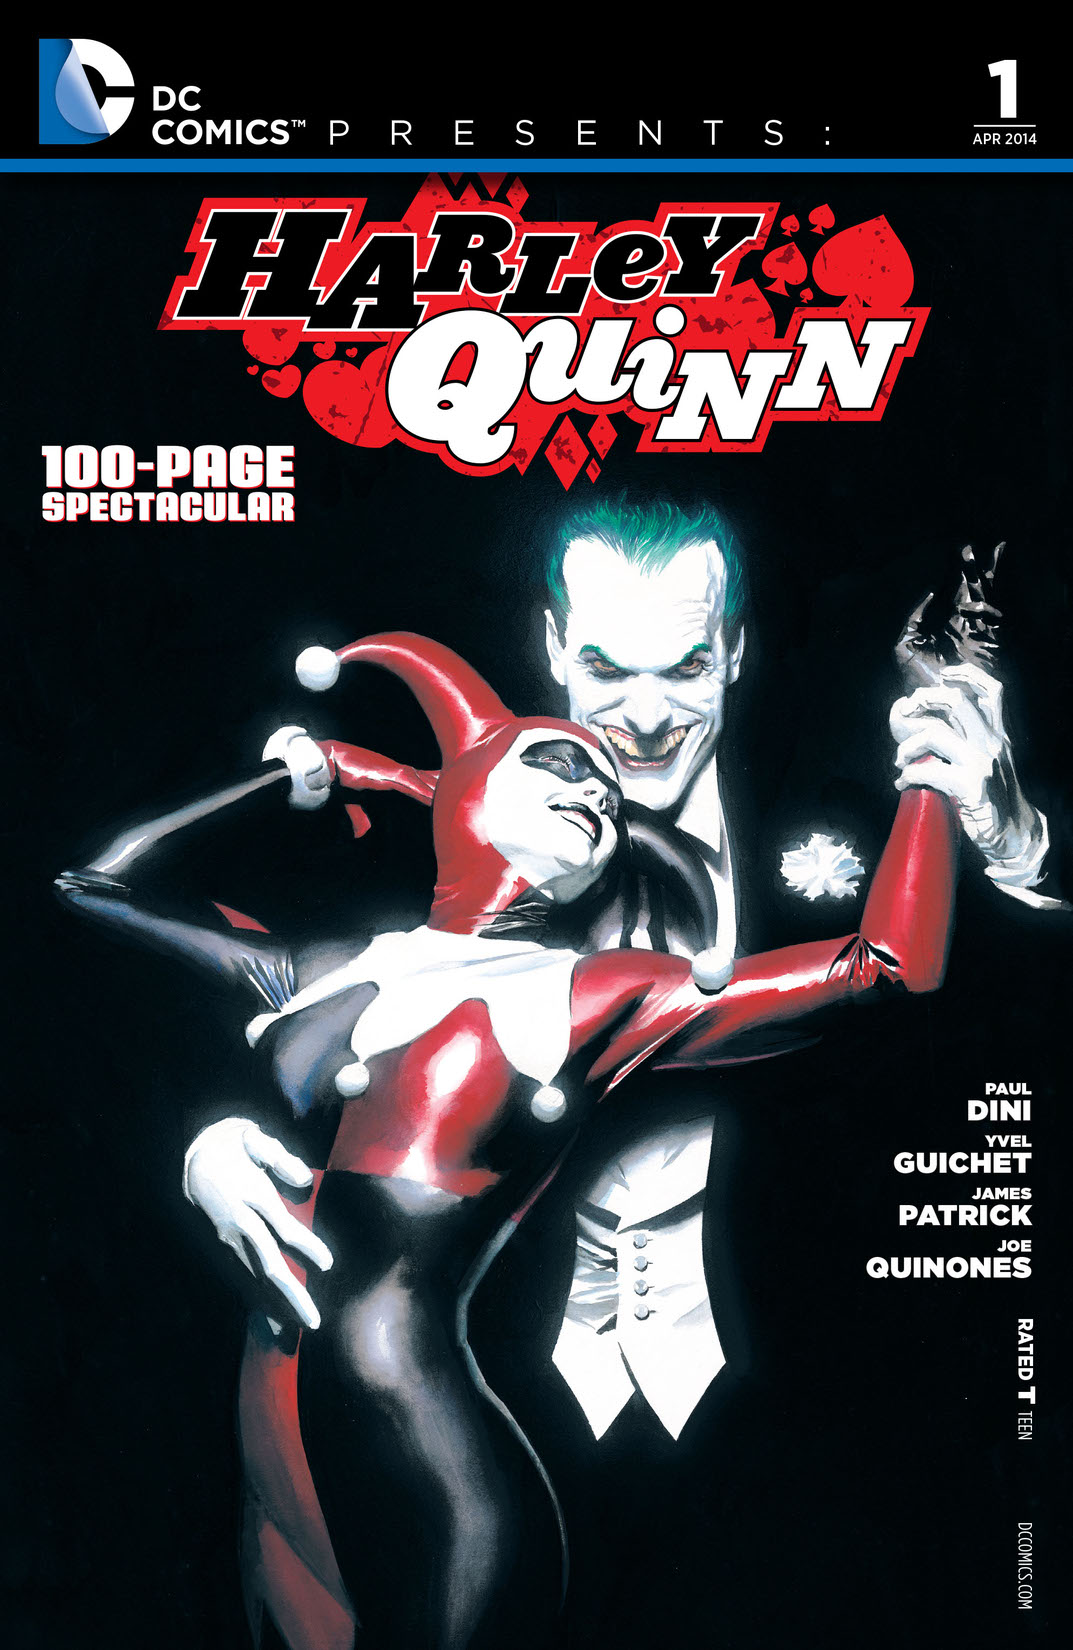 DC Comics Presents: Harley Quinn (2014-) #1 preview images